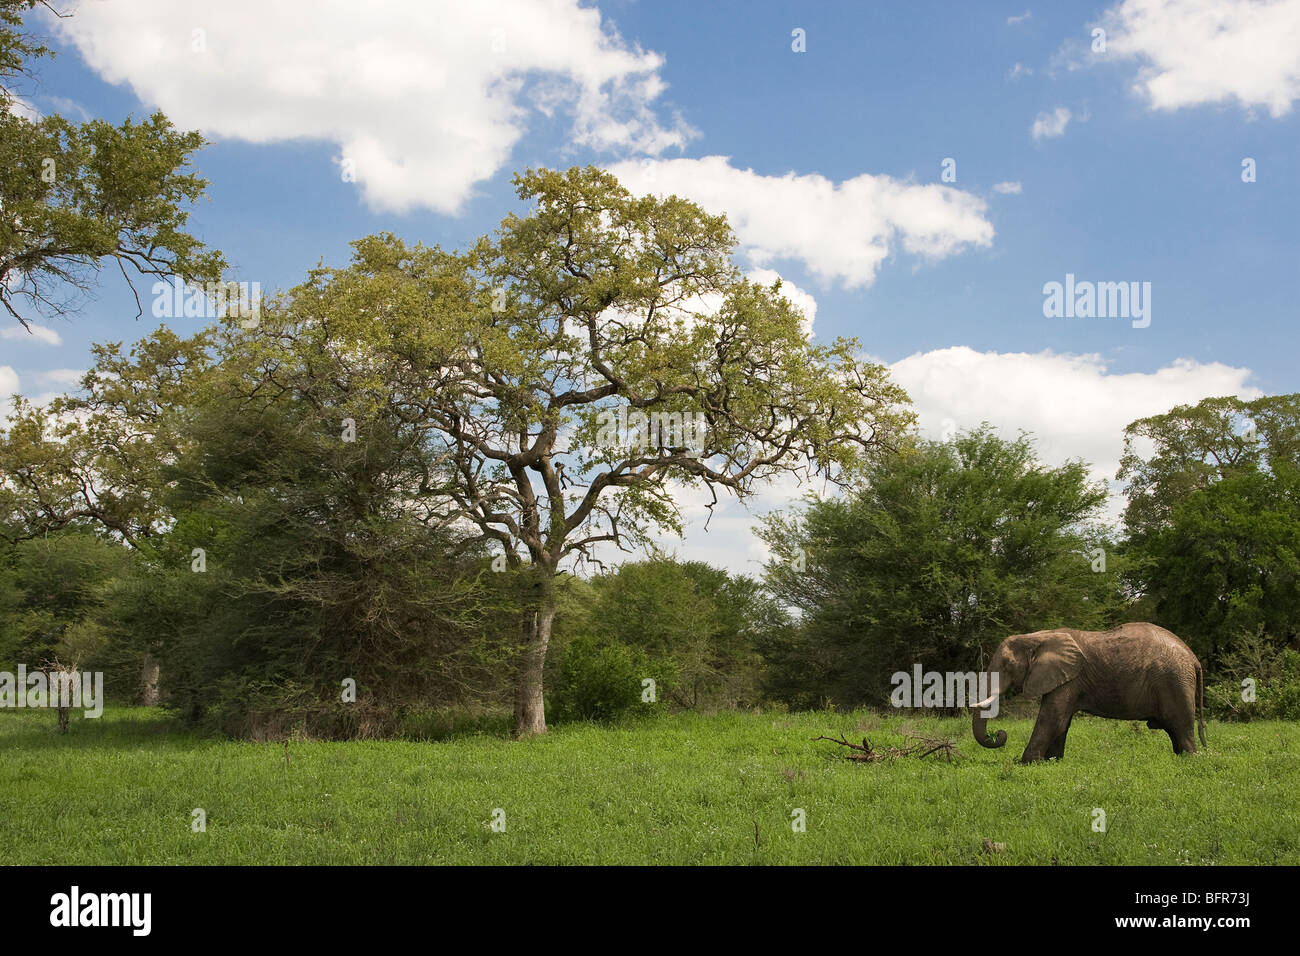 Elephant browsing in lush green area Stock Photo